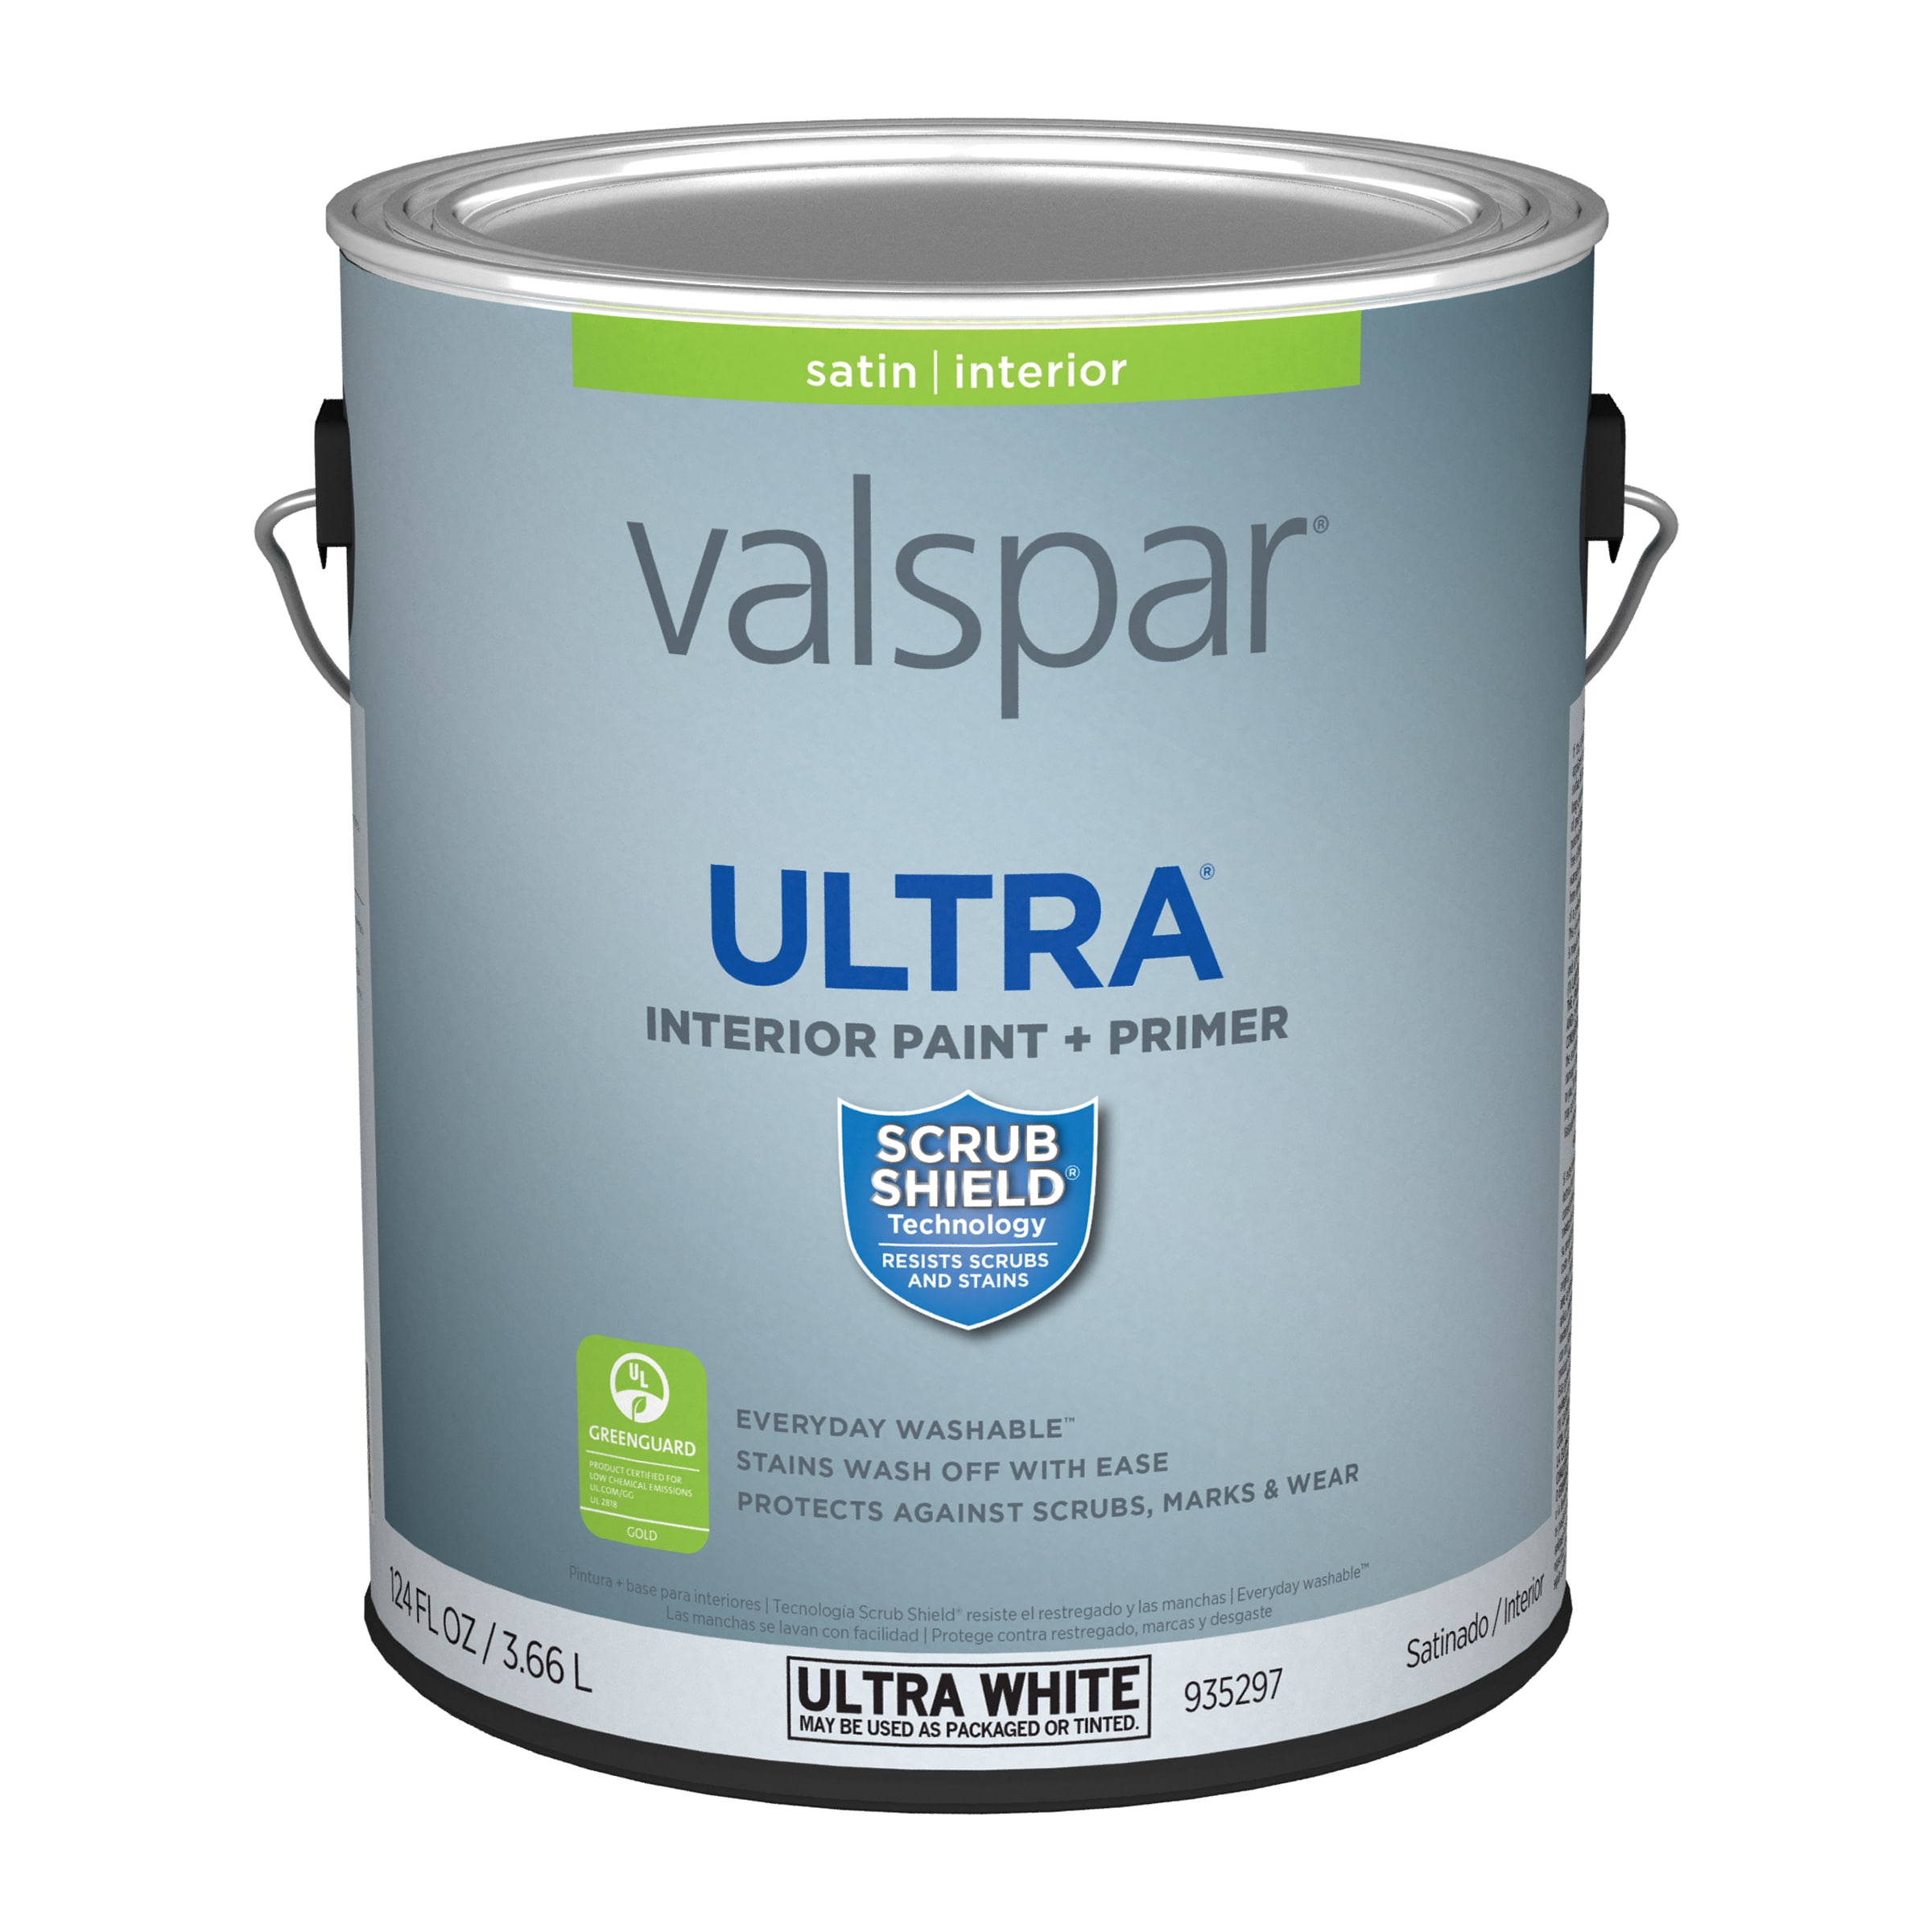 Valspar Accolade Super Premium 100% Acrylic Paint & Primer Satin Interior  Wall Paint, Ultra White Base, 1 Gal. - Power Townsend Company